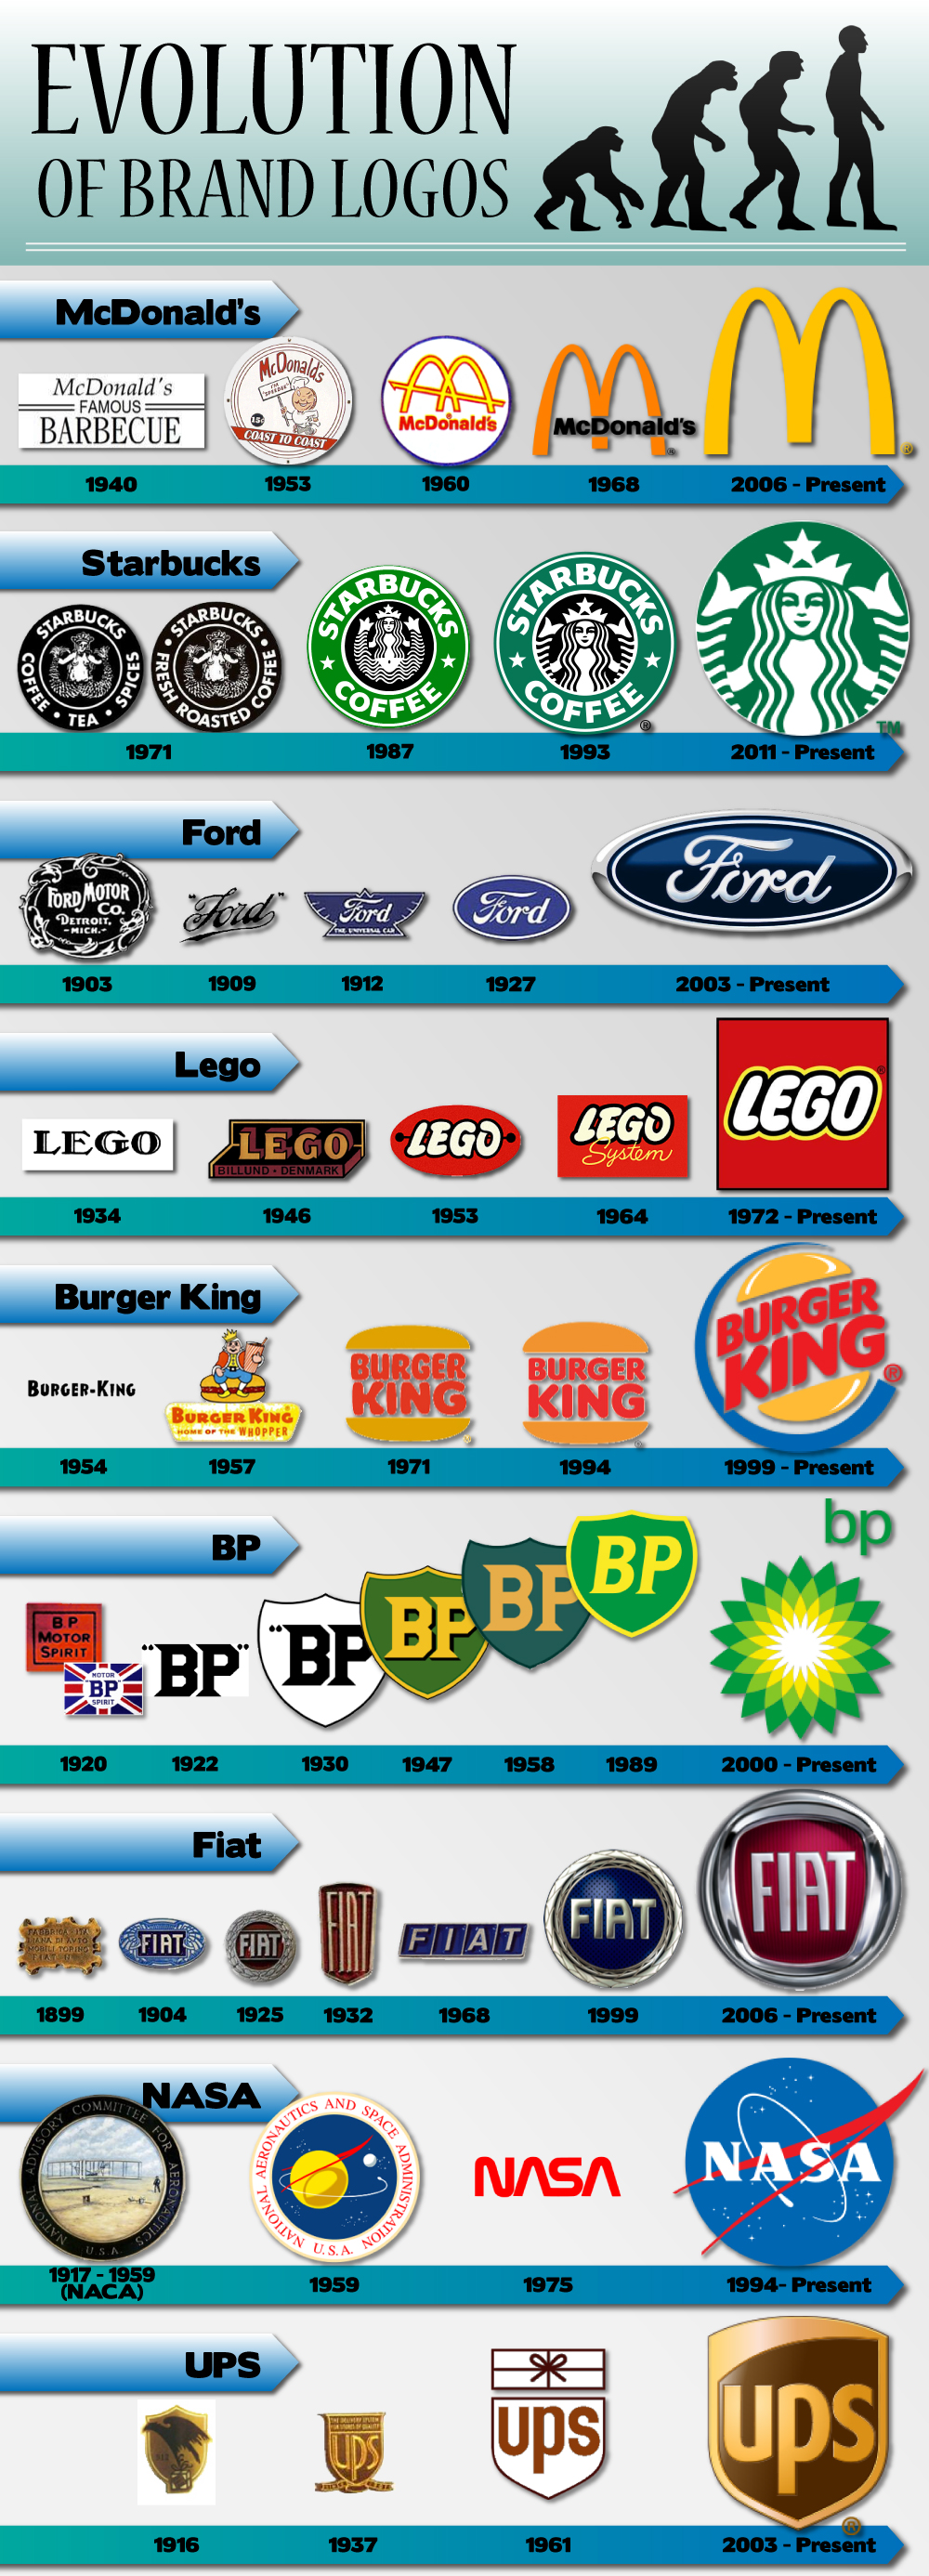 Evolution of brand logos Visual.ly